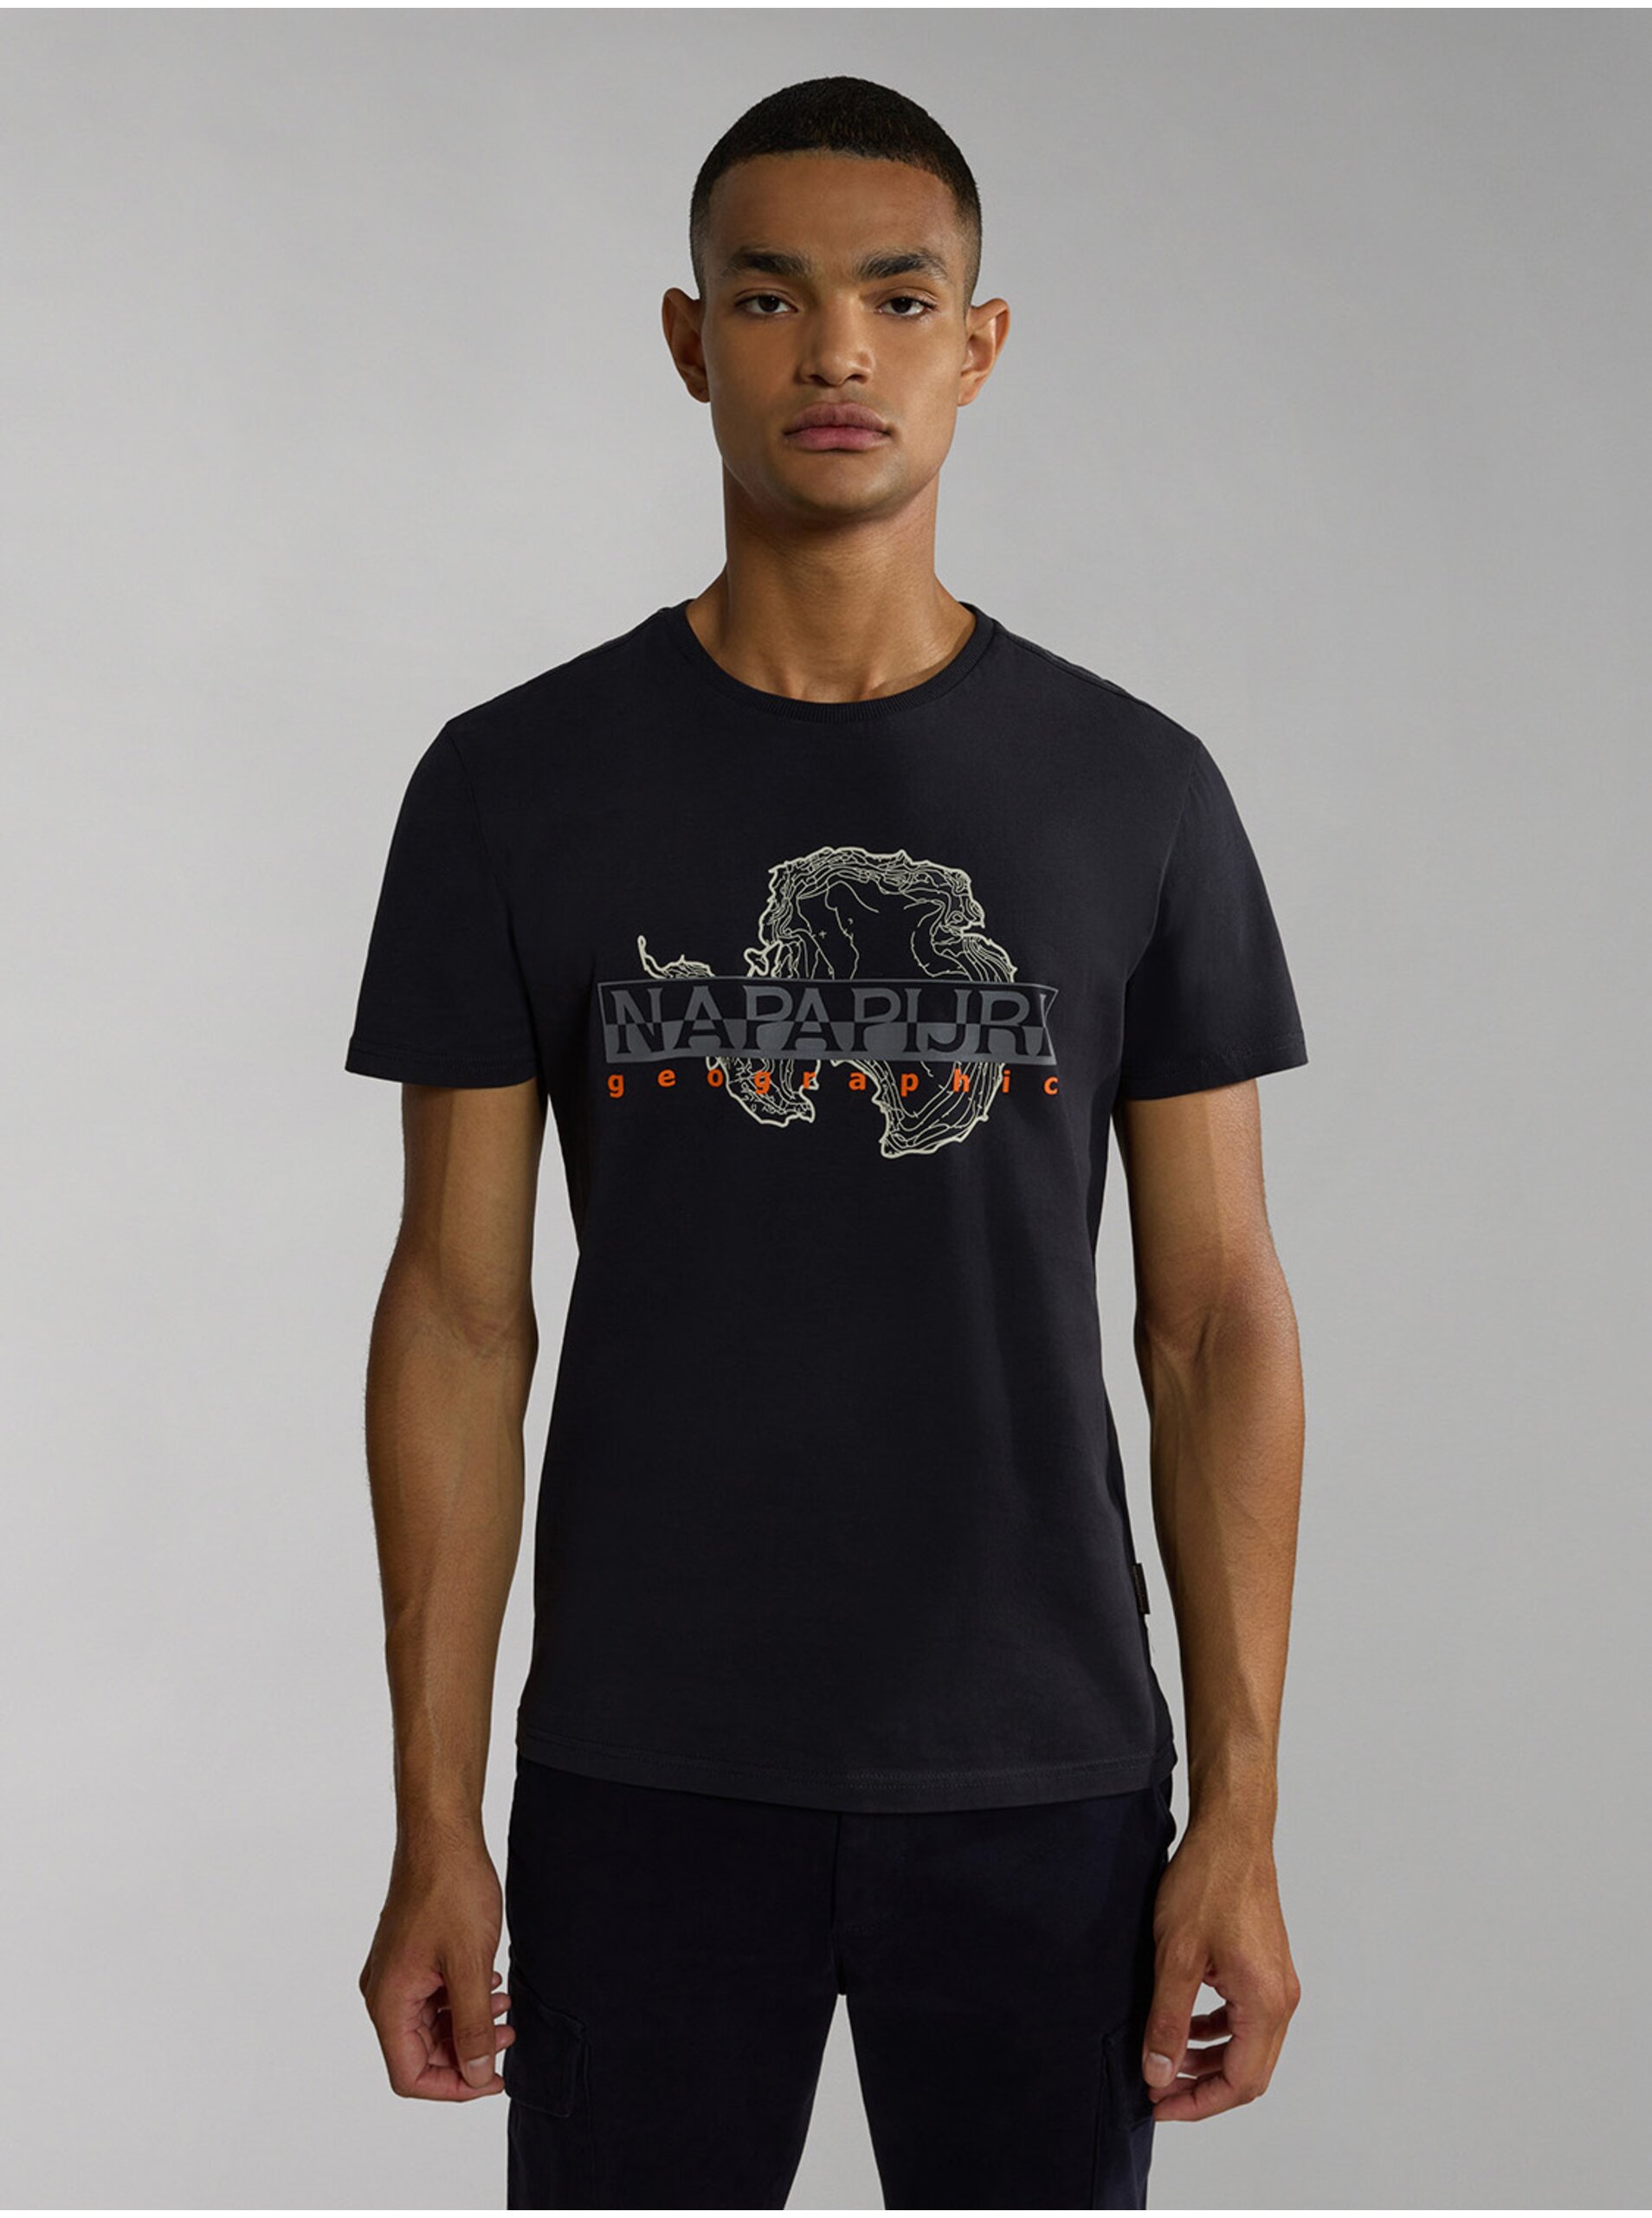 Men's Black T-Shirt NAPAPIJRI Iceberg - Men's